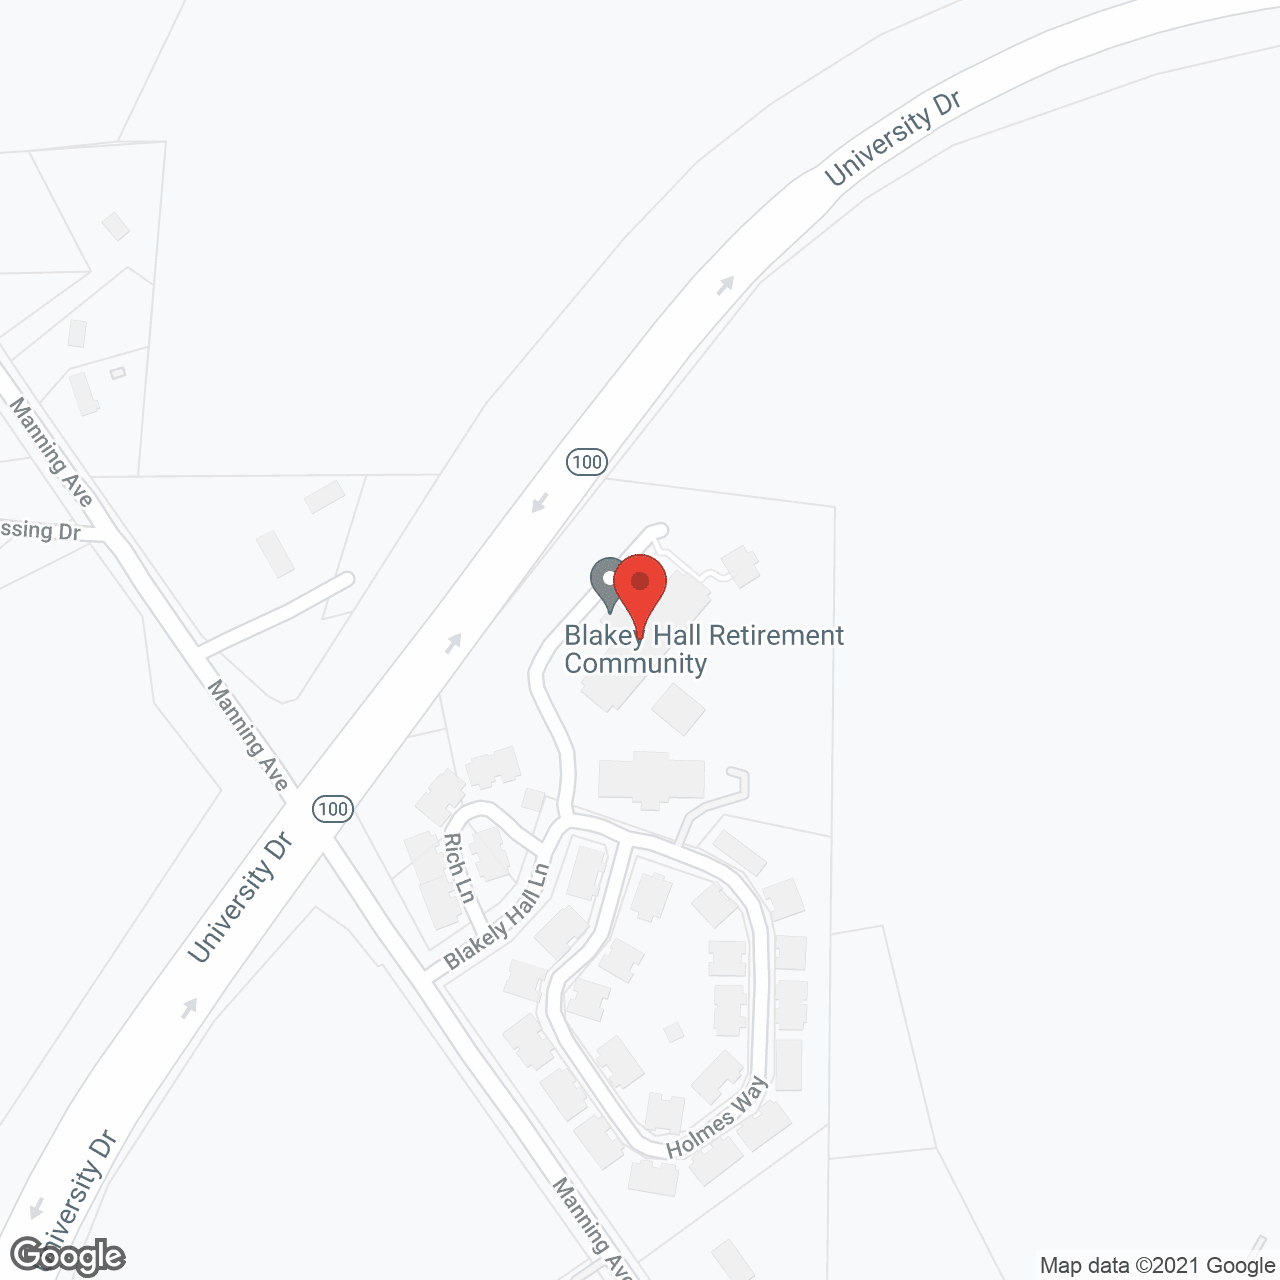 Blakey Hall Retirement Community in google map